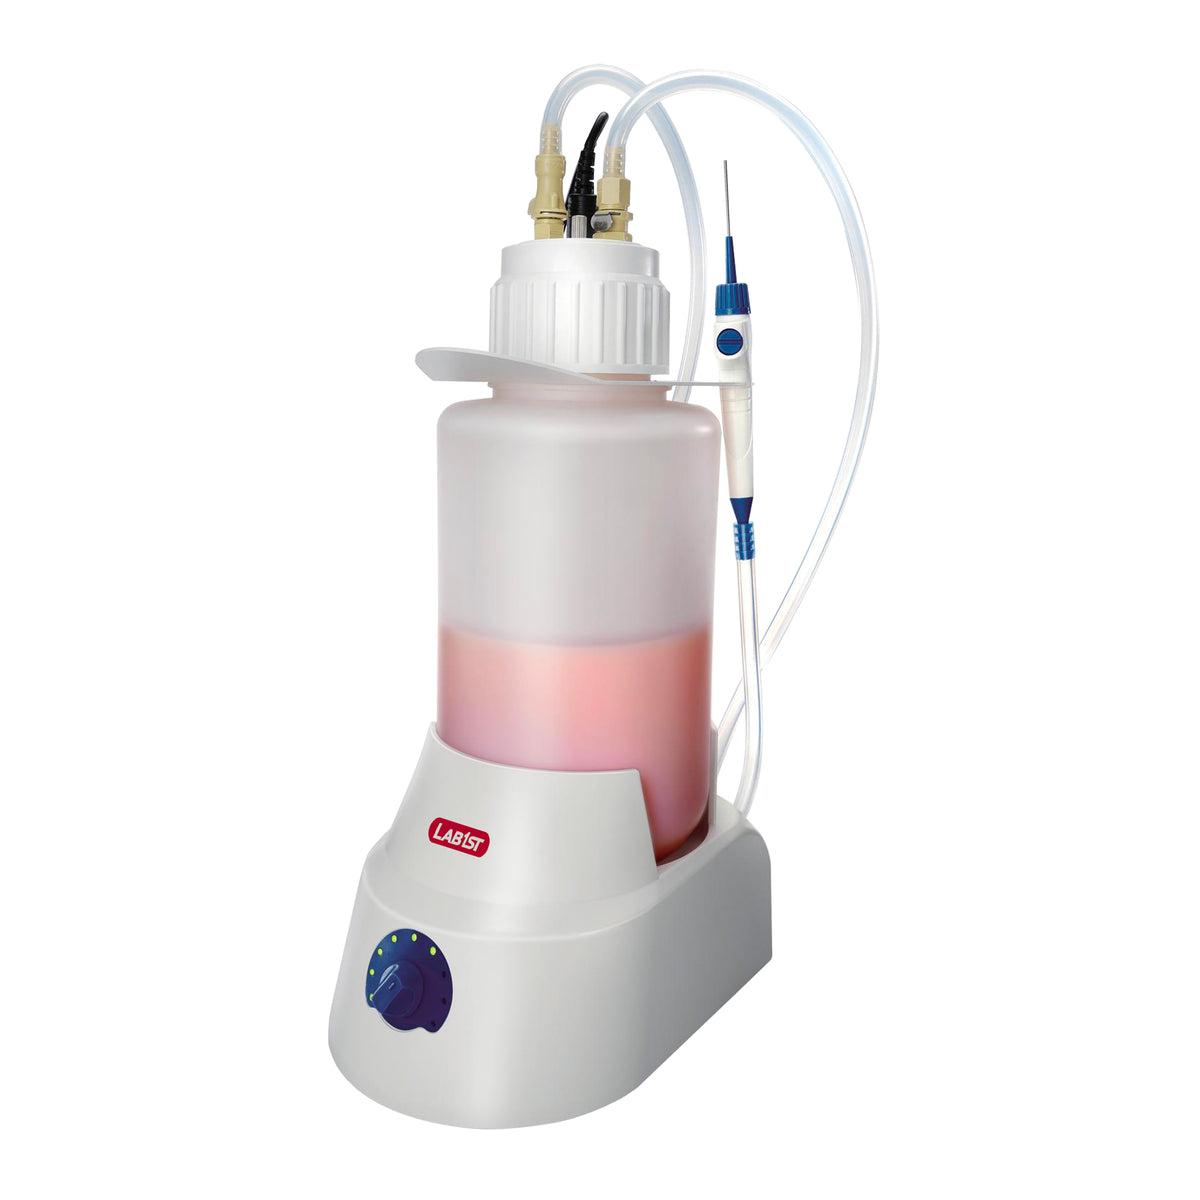 Vacpette Plus Vacuum-Controlled Aspiration System